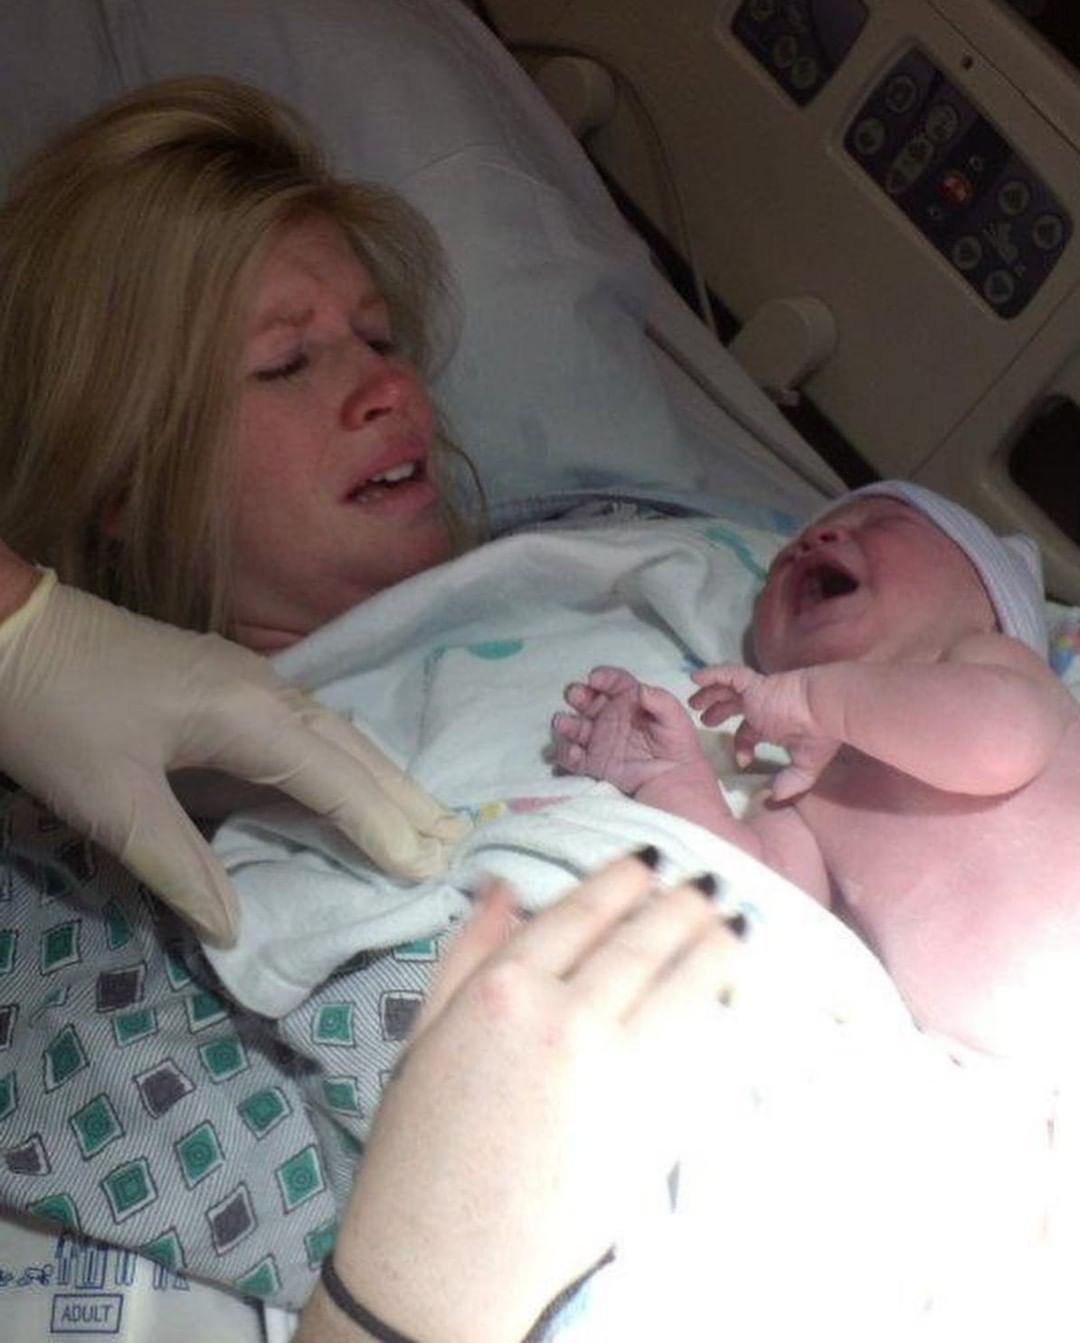 Jordan with her newborn son. (Courtesy of <a href="https://www.instagram.com/jordanshutton/">Jordan Hutton</a>)